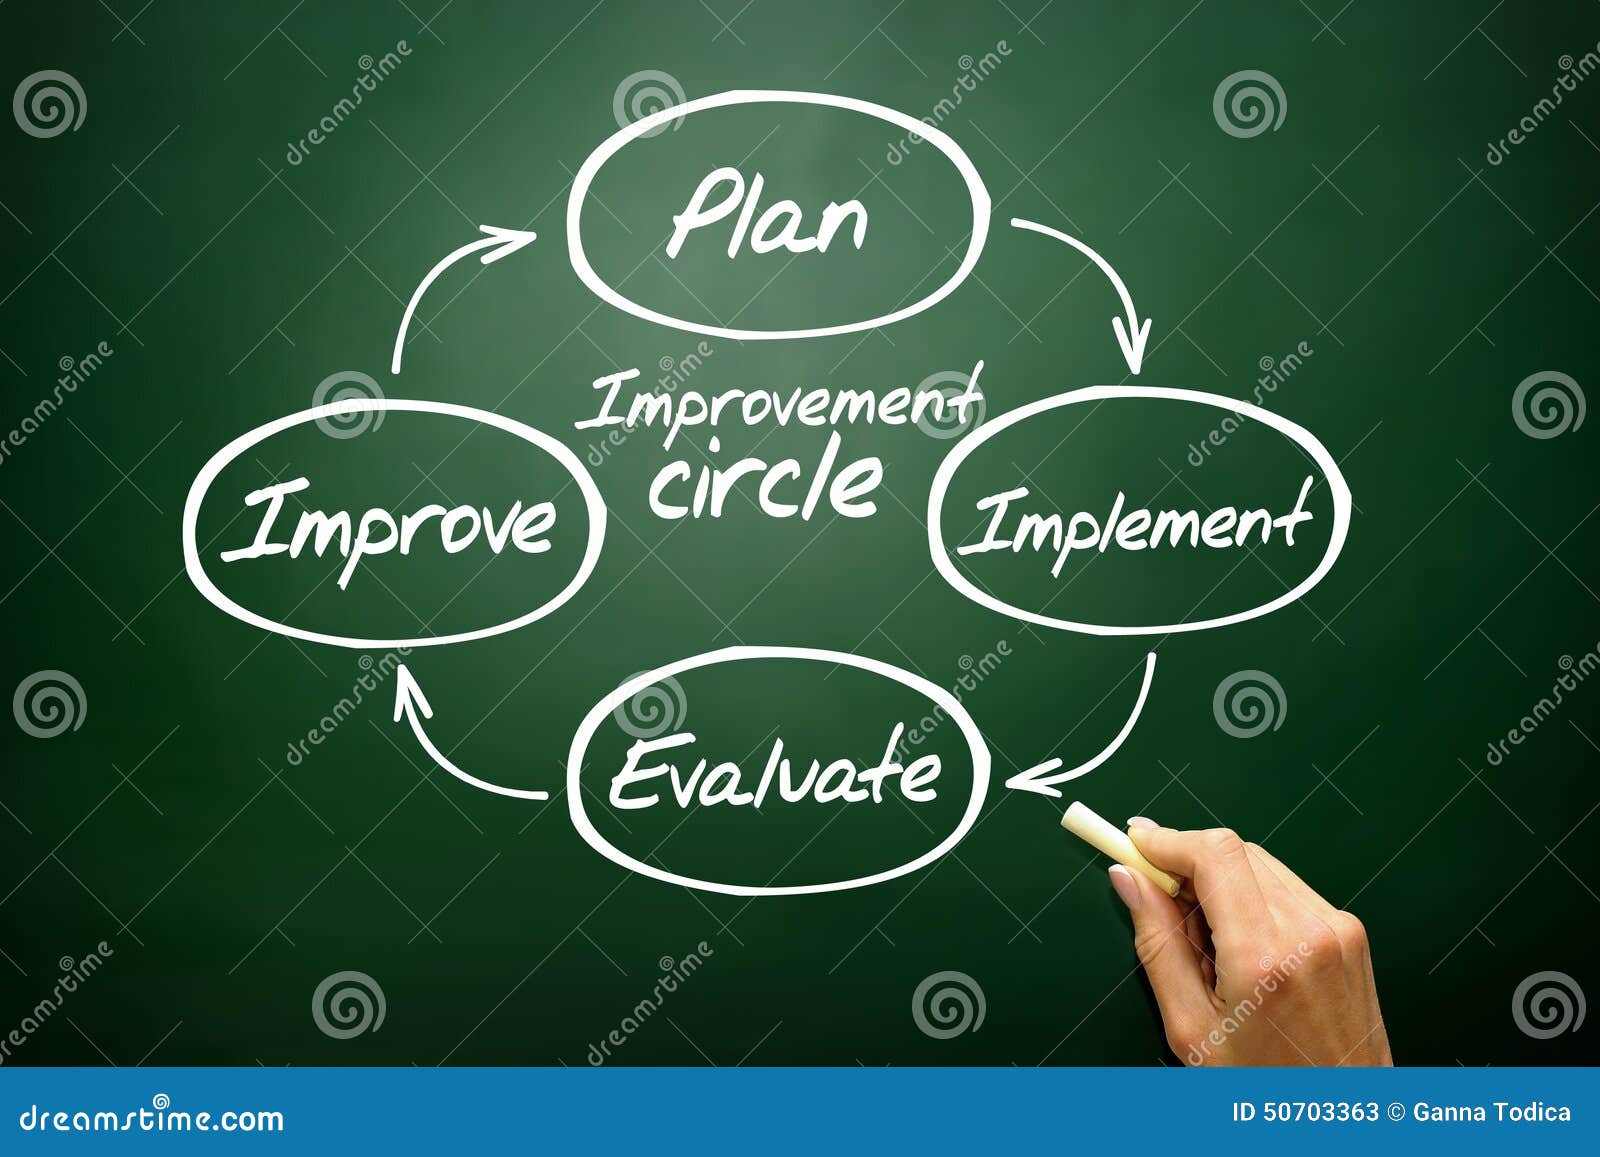 improvement circle of plan, implement, evaluate, improve concept